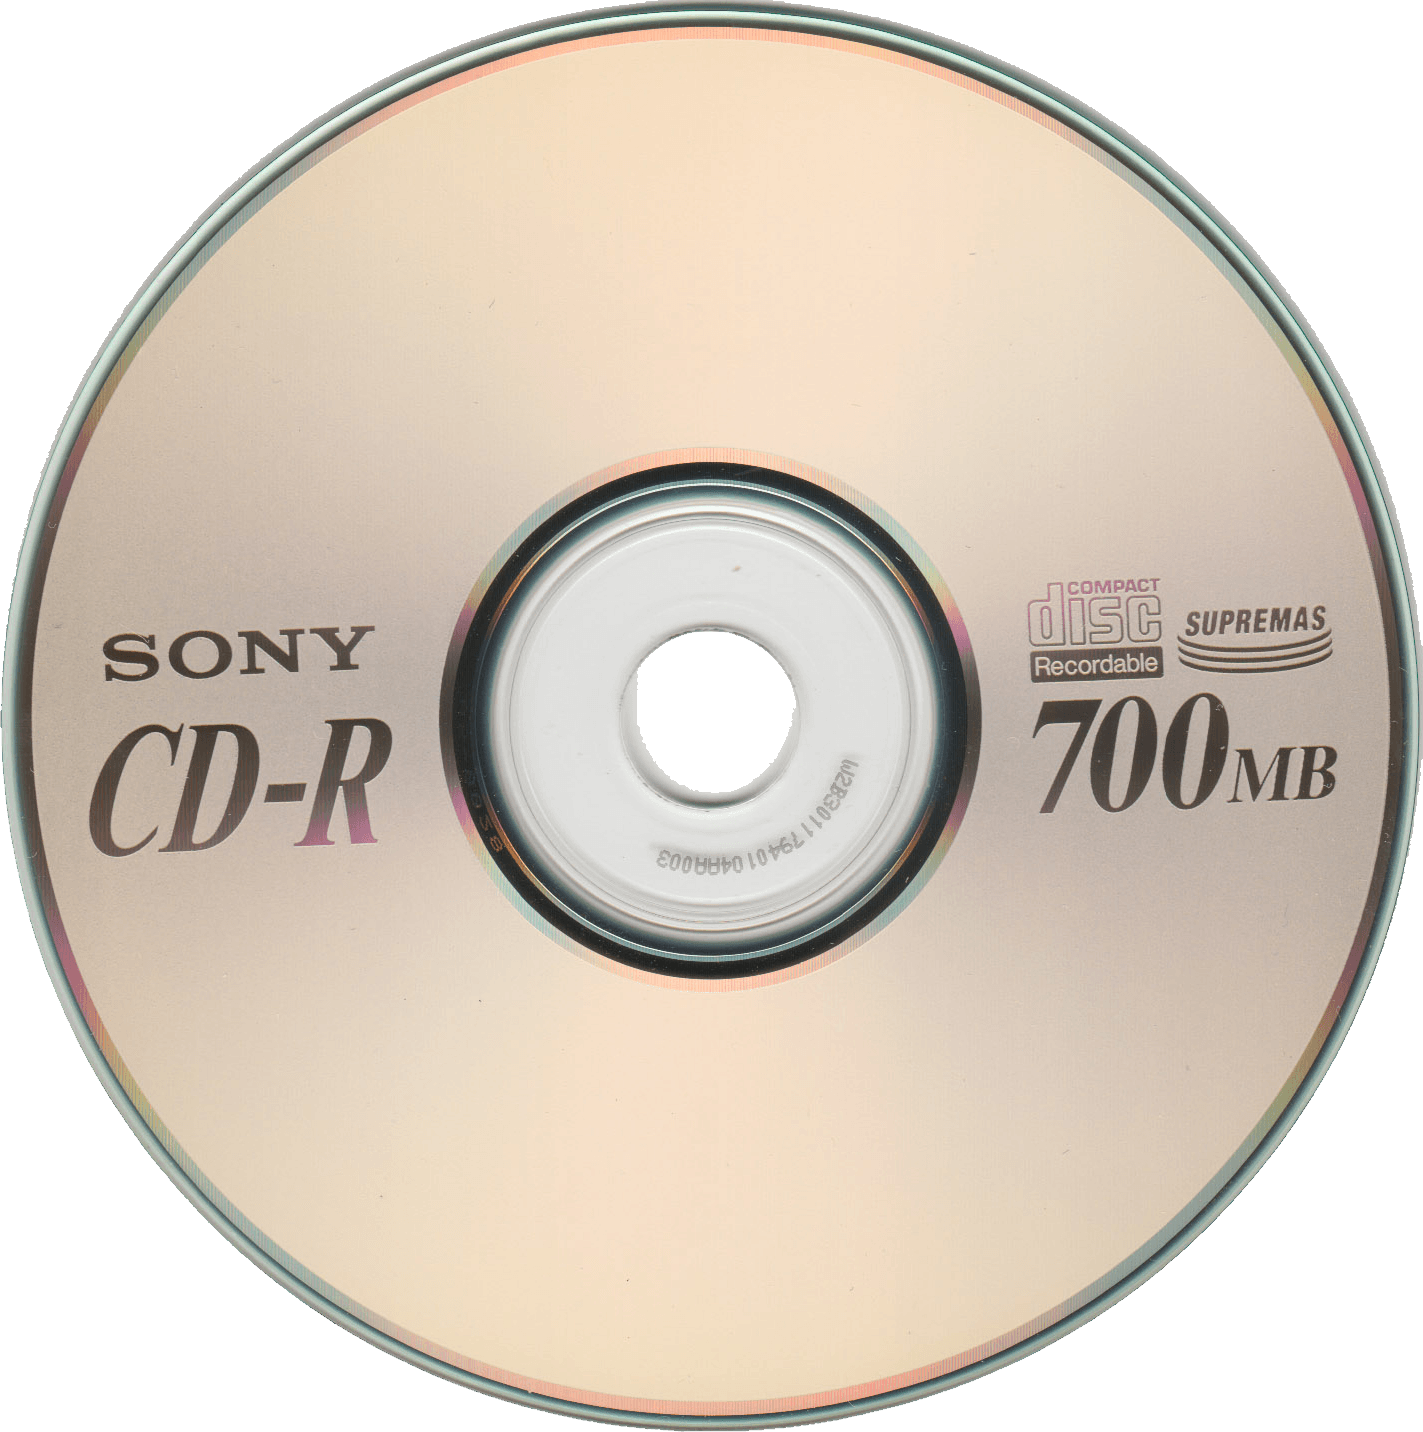 Imagen de PNG de CD de disco compacto